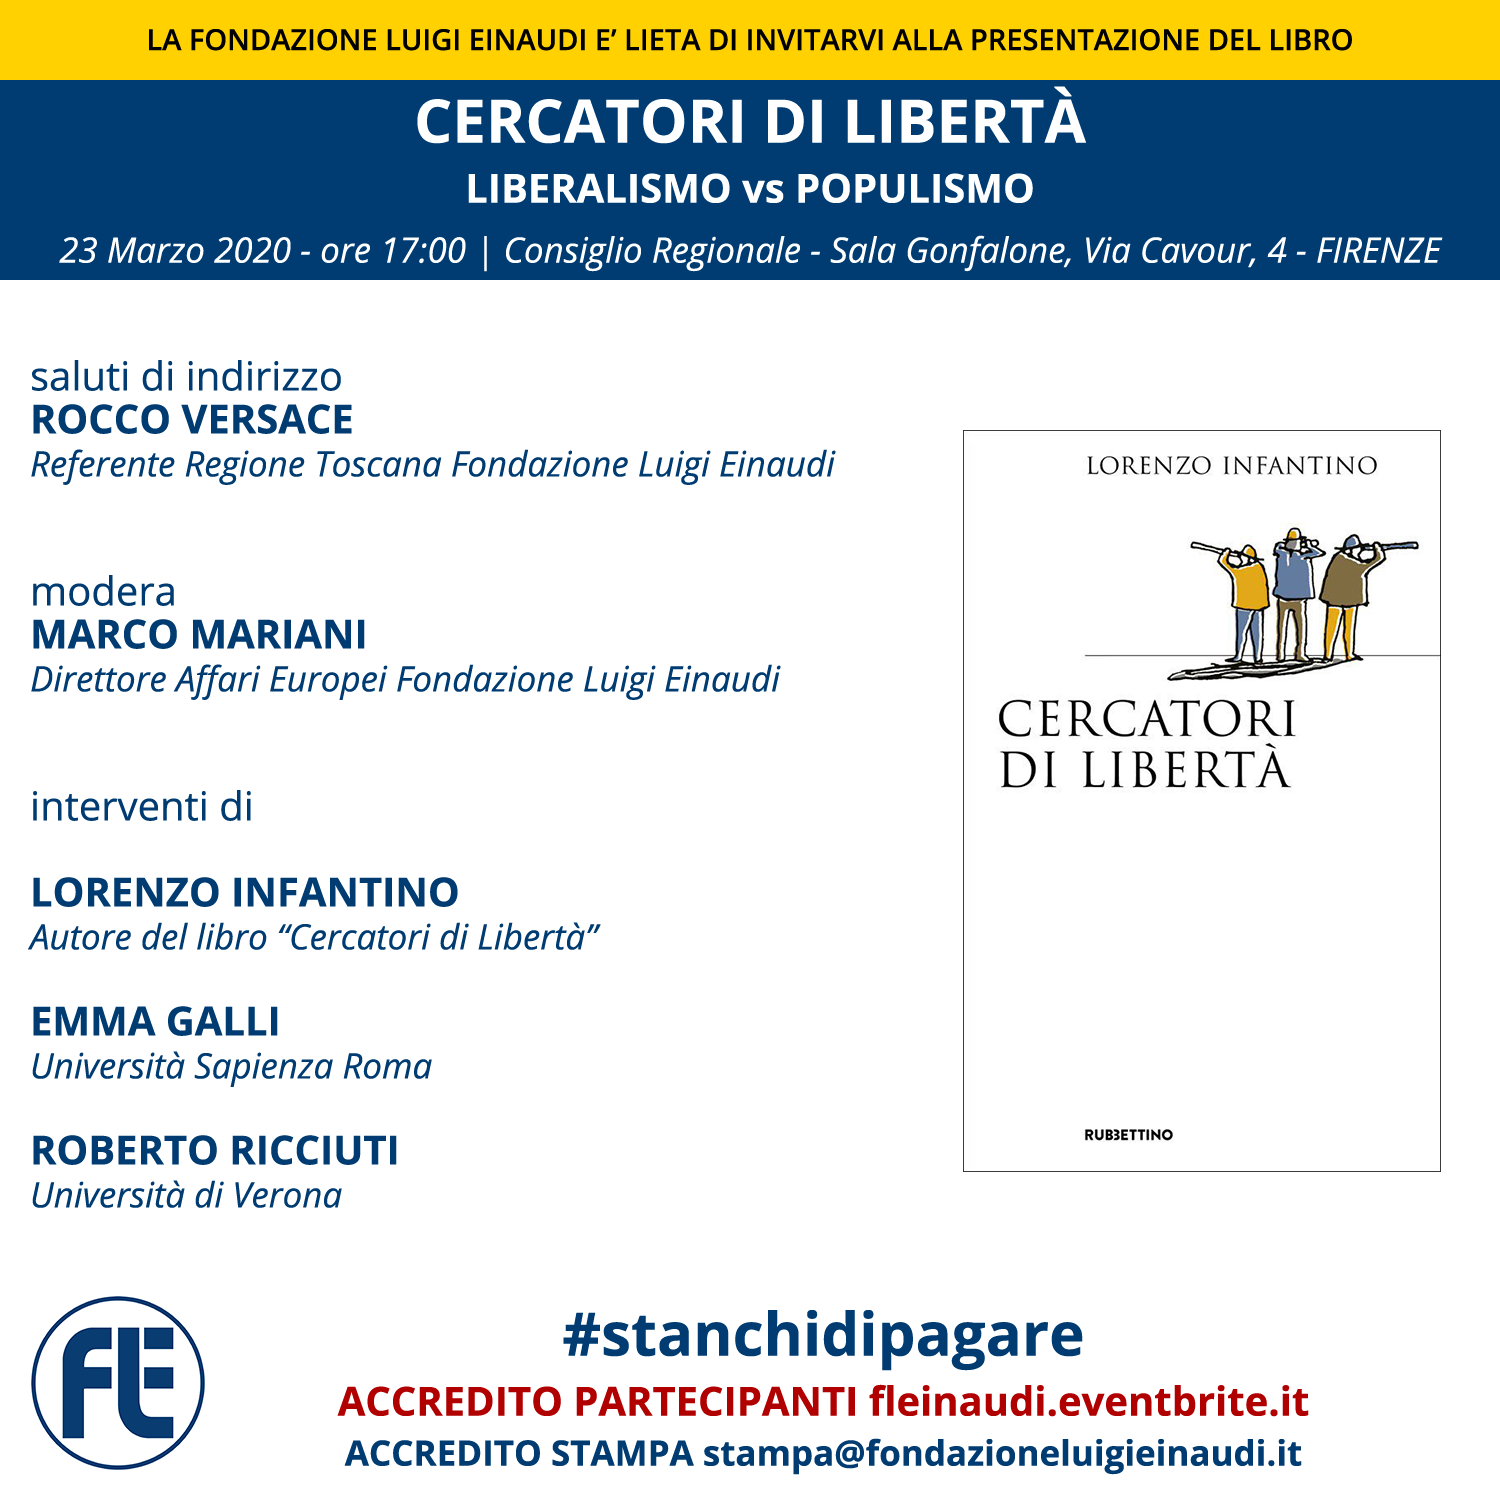 Book presentation: “Cercatori di Libertà” (Freedom seekers) by LORENZO INFANTINO in Florence – EVENT POSTPONED